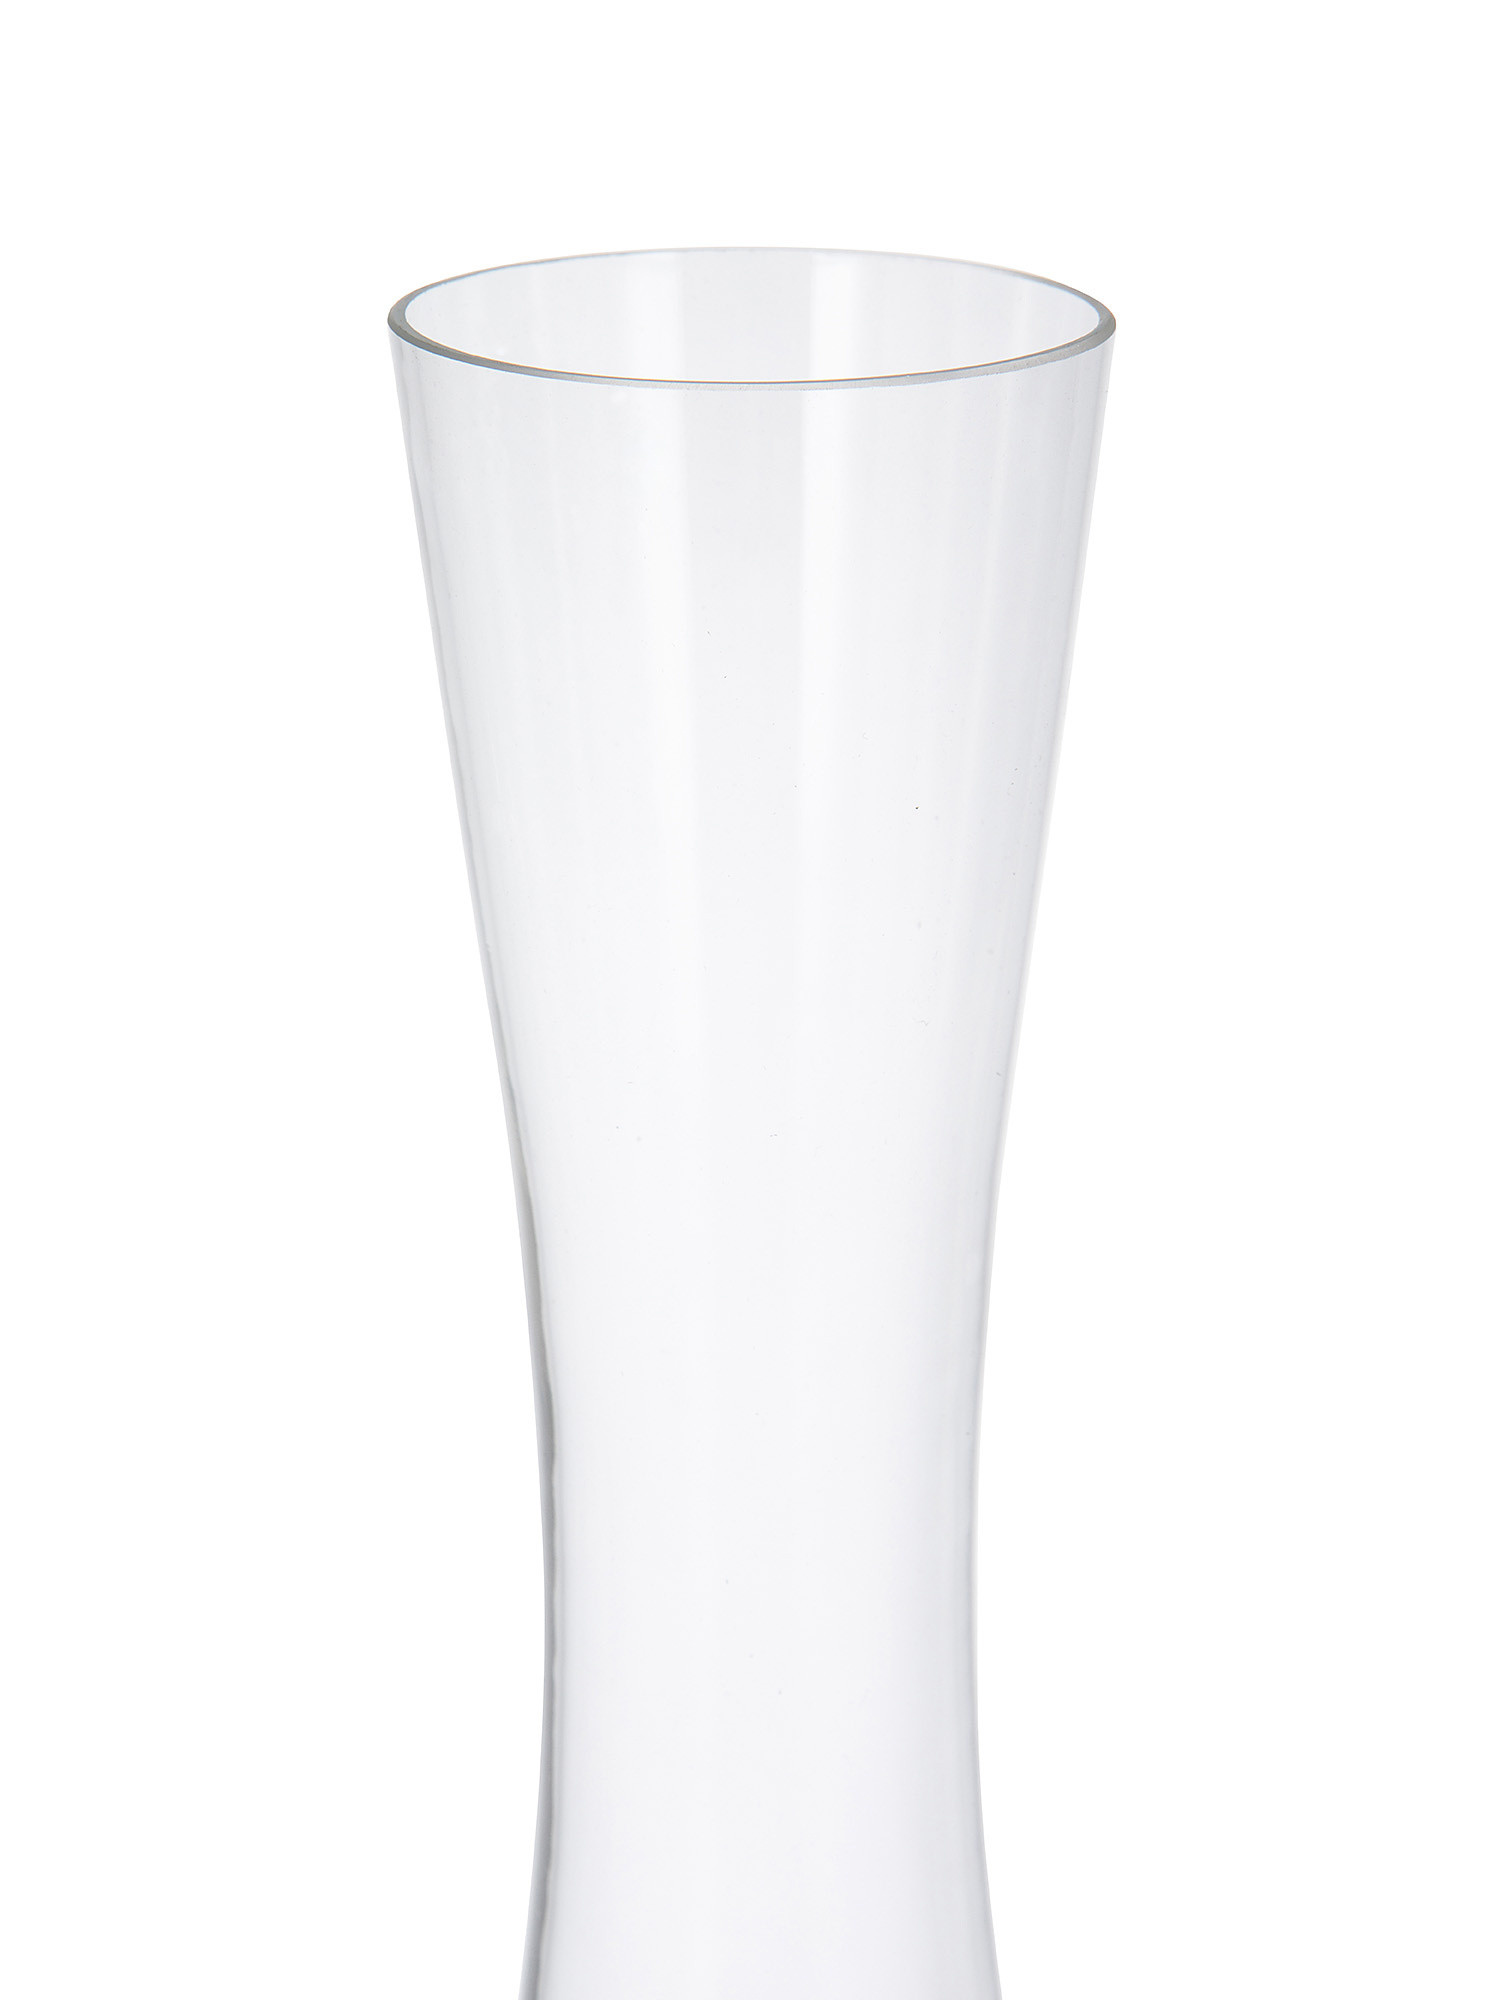 Bohemia glass decanter, Transparent, large image number 1